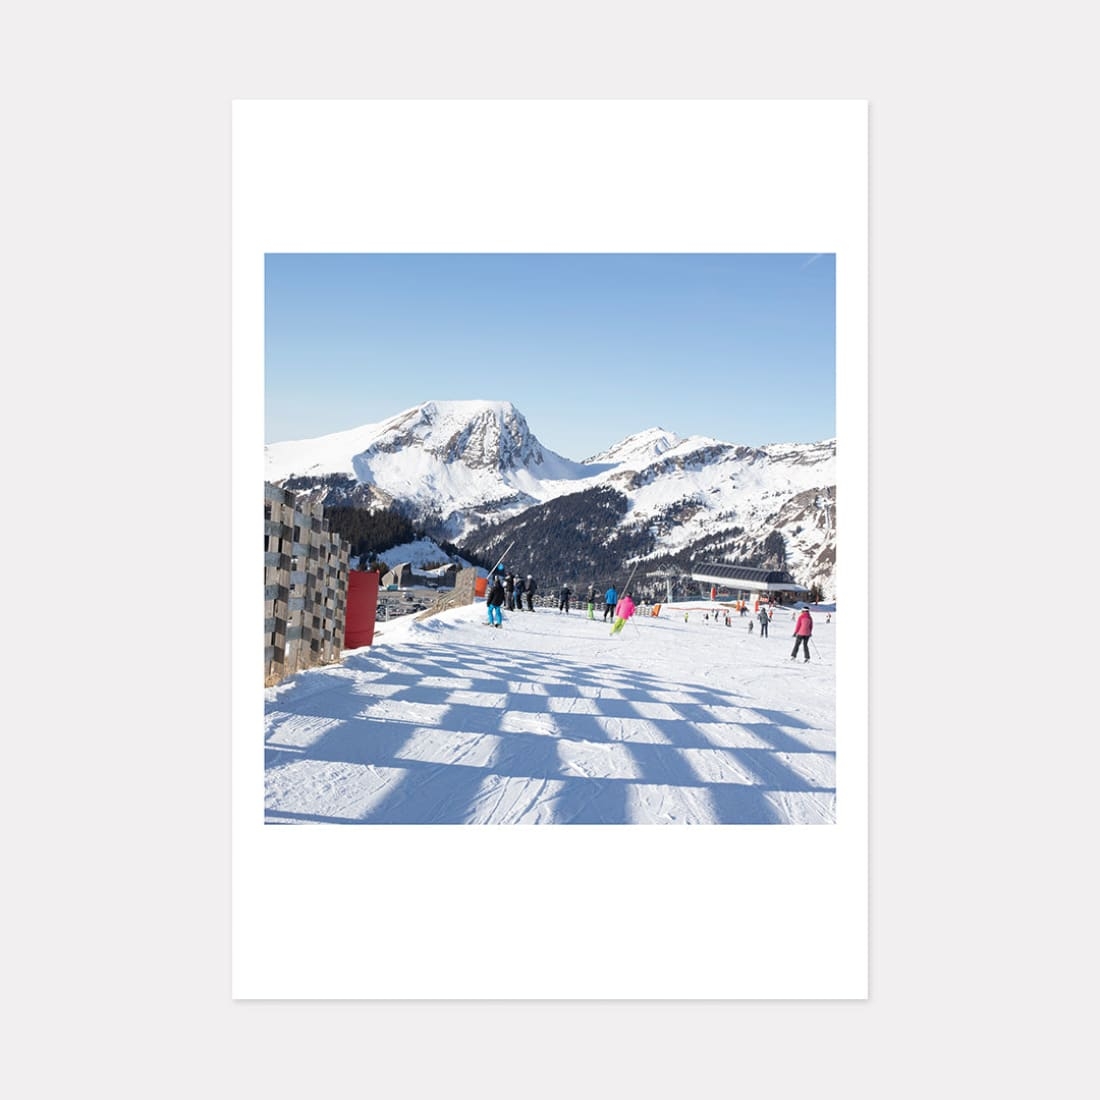 Checkerboard Art Print, A2 (59.4cm x 42cm) unframed print – Powderhound